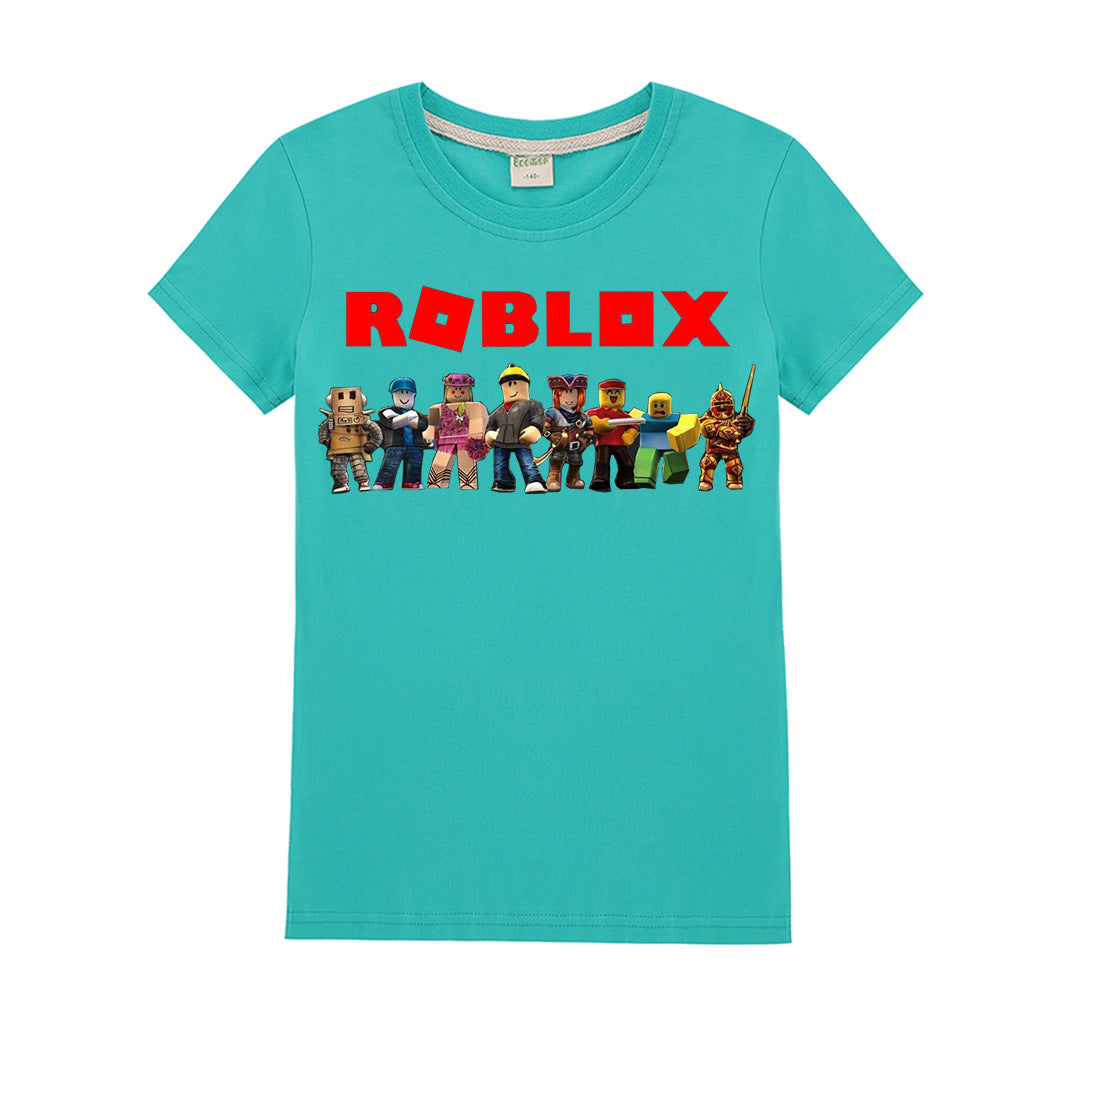 Roblox T Shirt For Boys And Girls Nfgoods - roblox shirt ninjago shirt roblox unisex kids